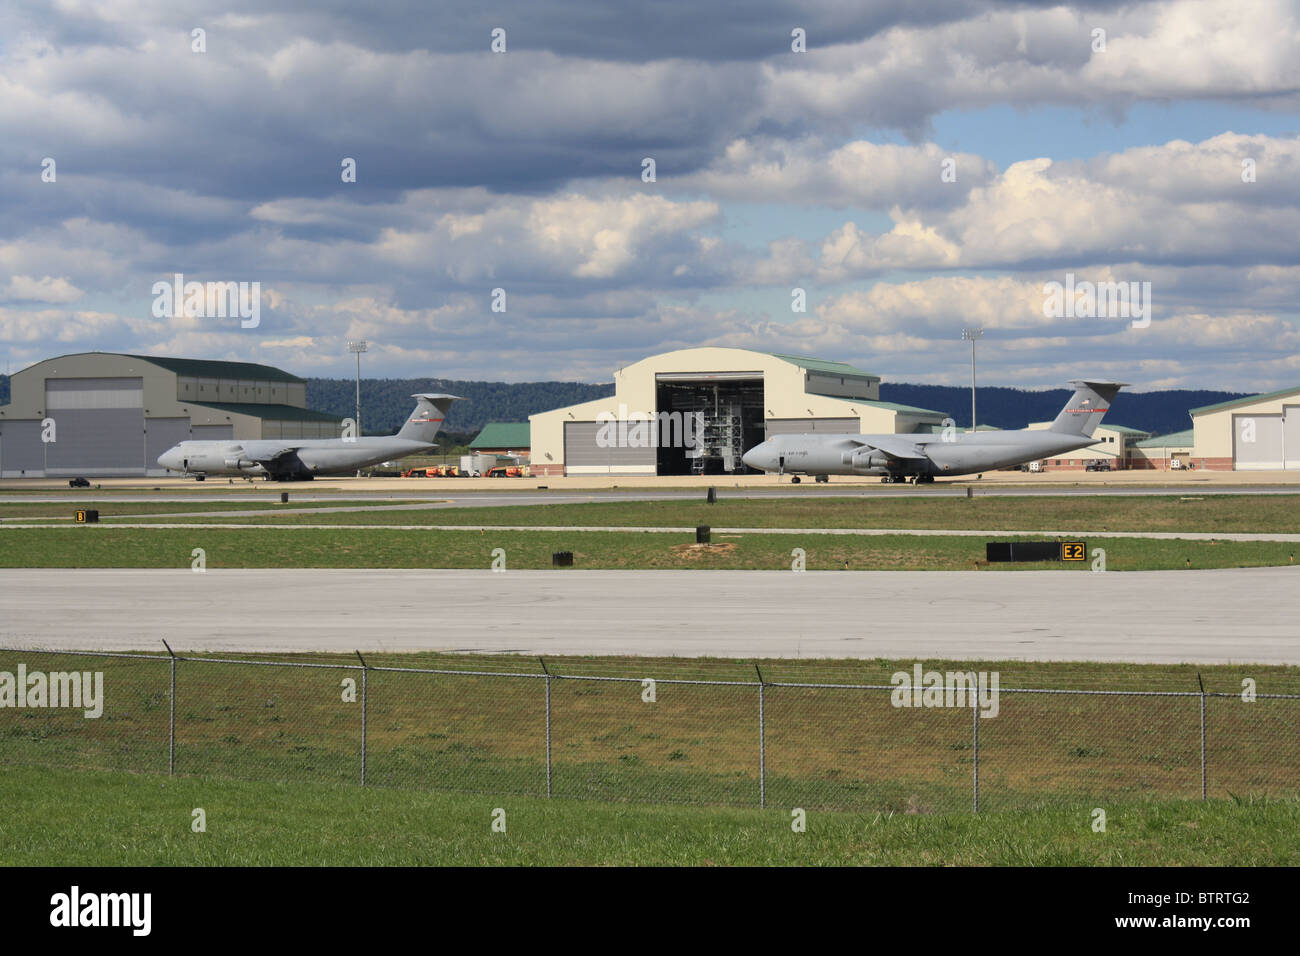 Military Cargo planes with hangar Stock Photo